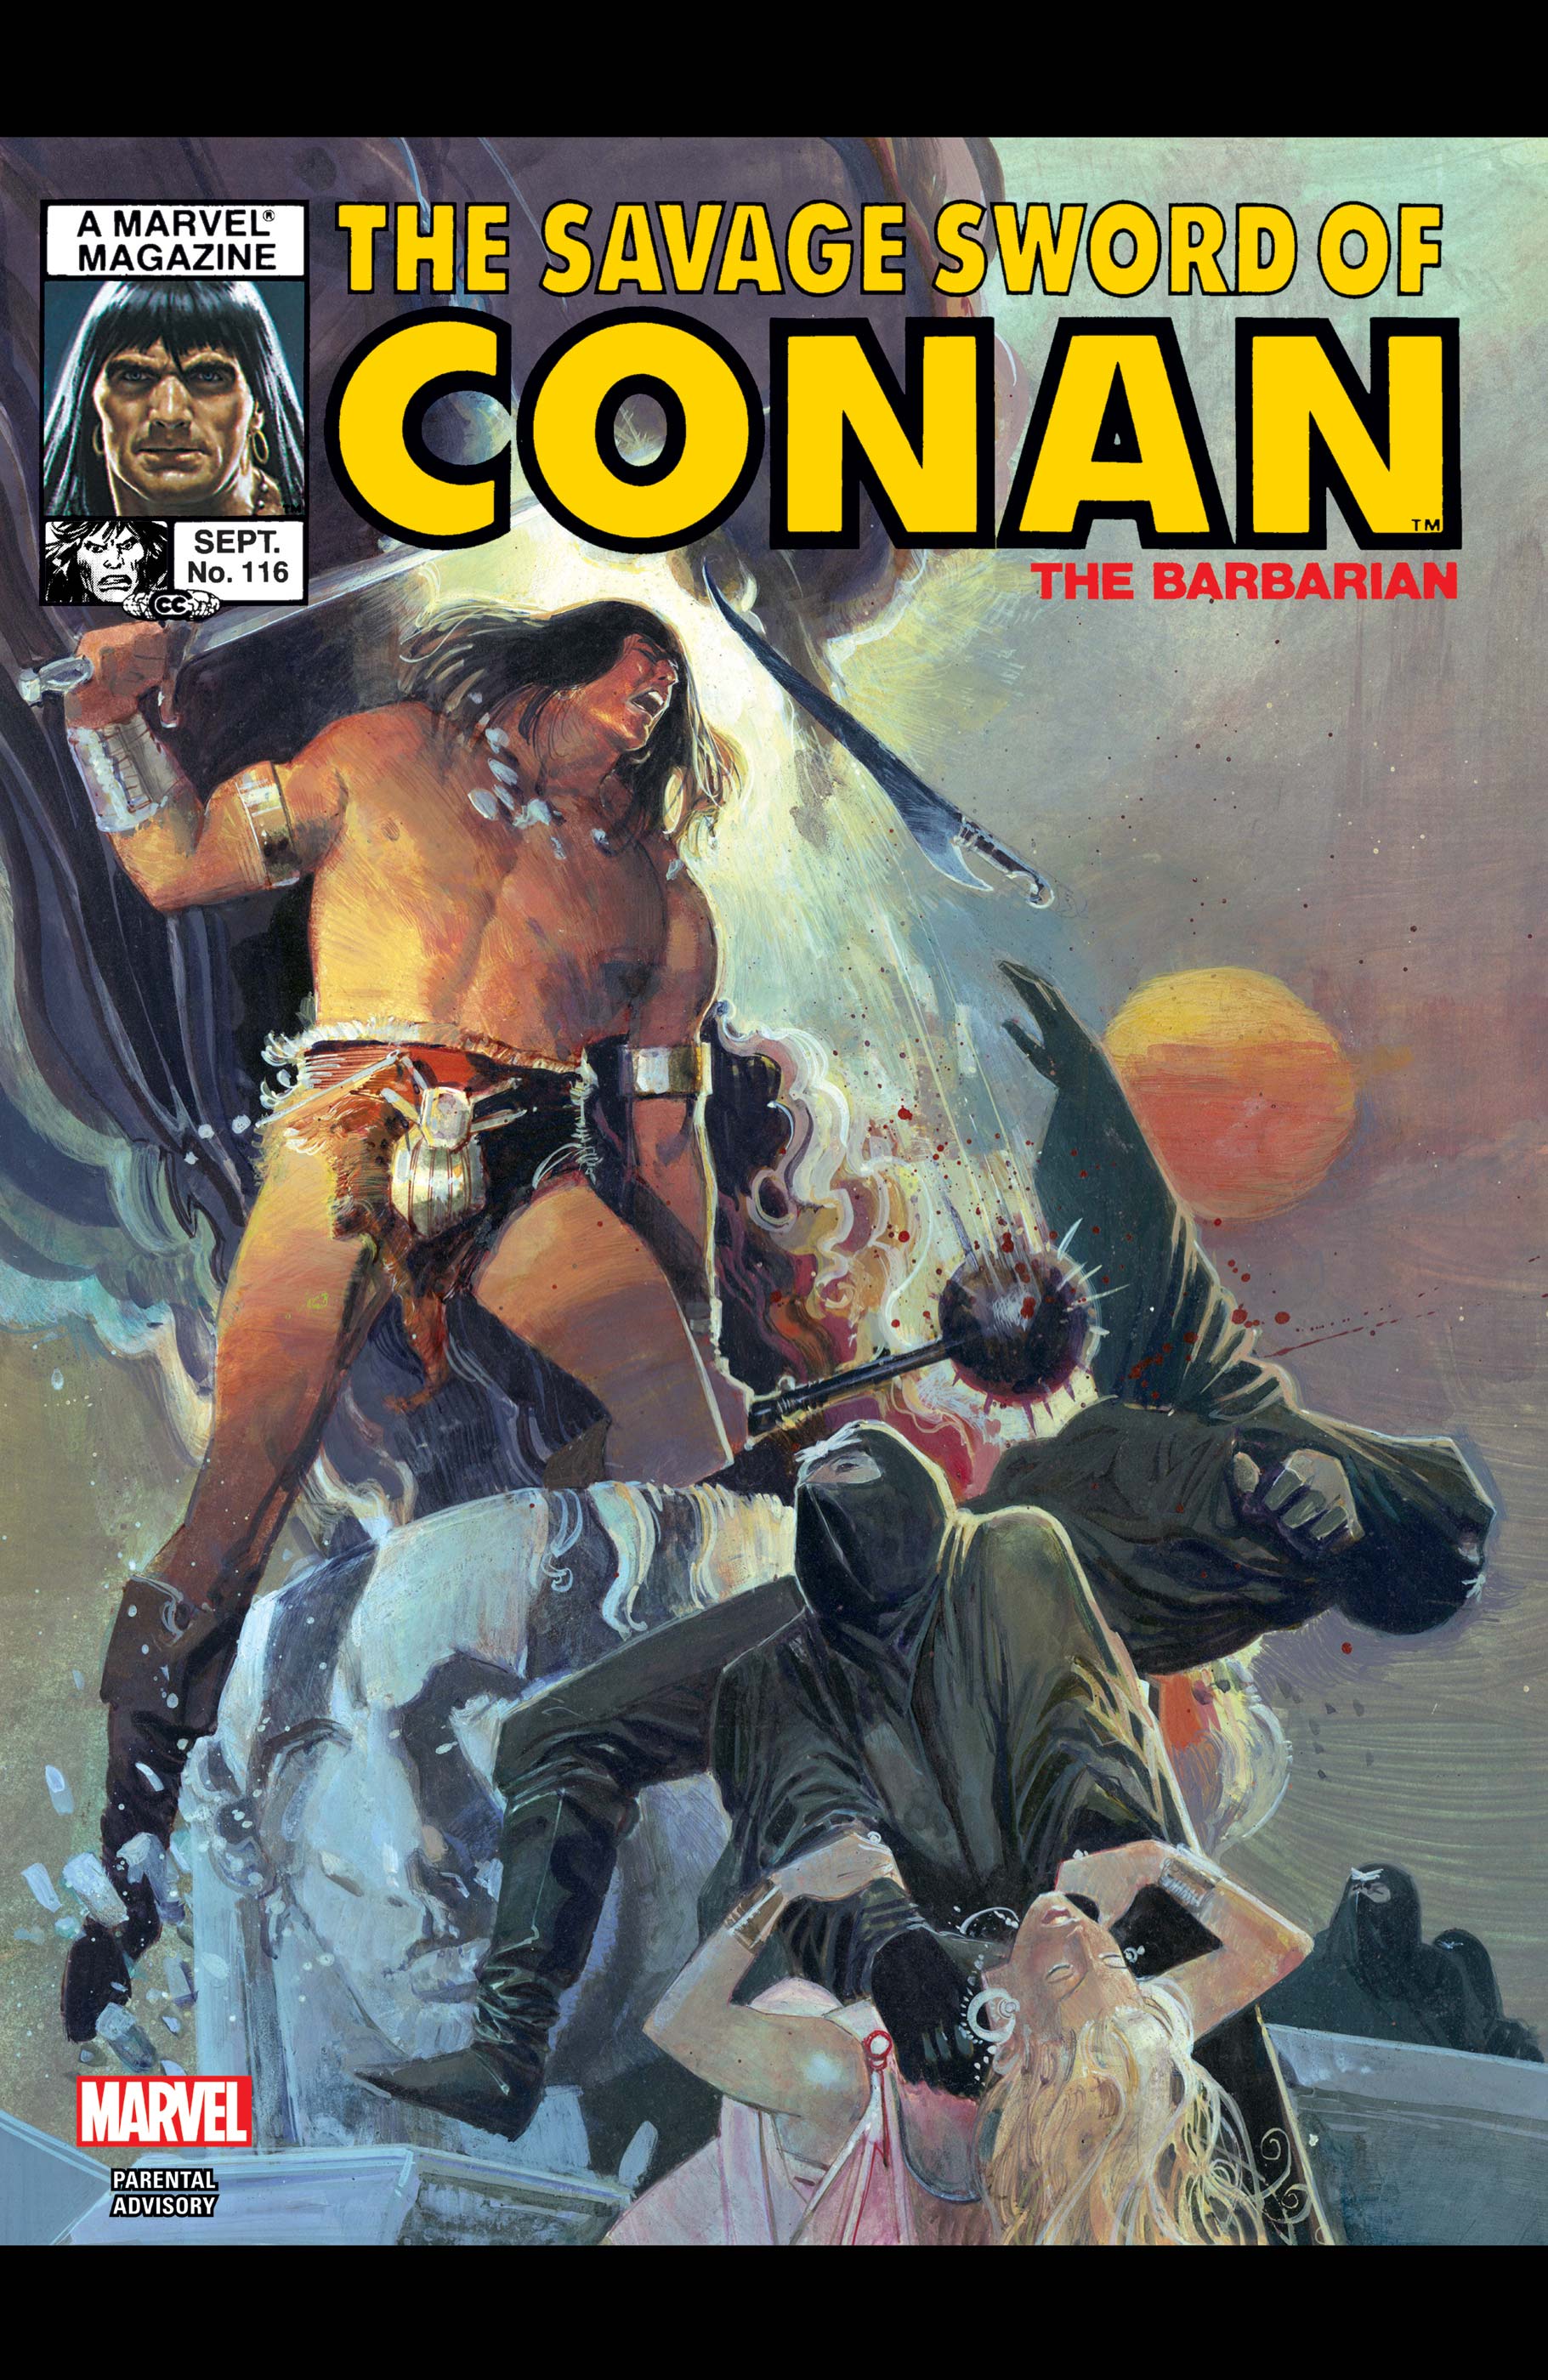 The Savage Sword of Conan (1974) #116